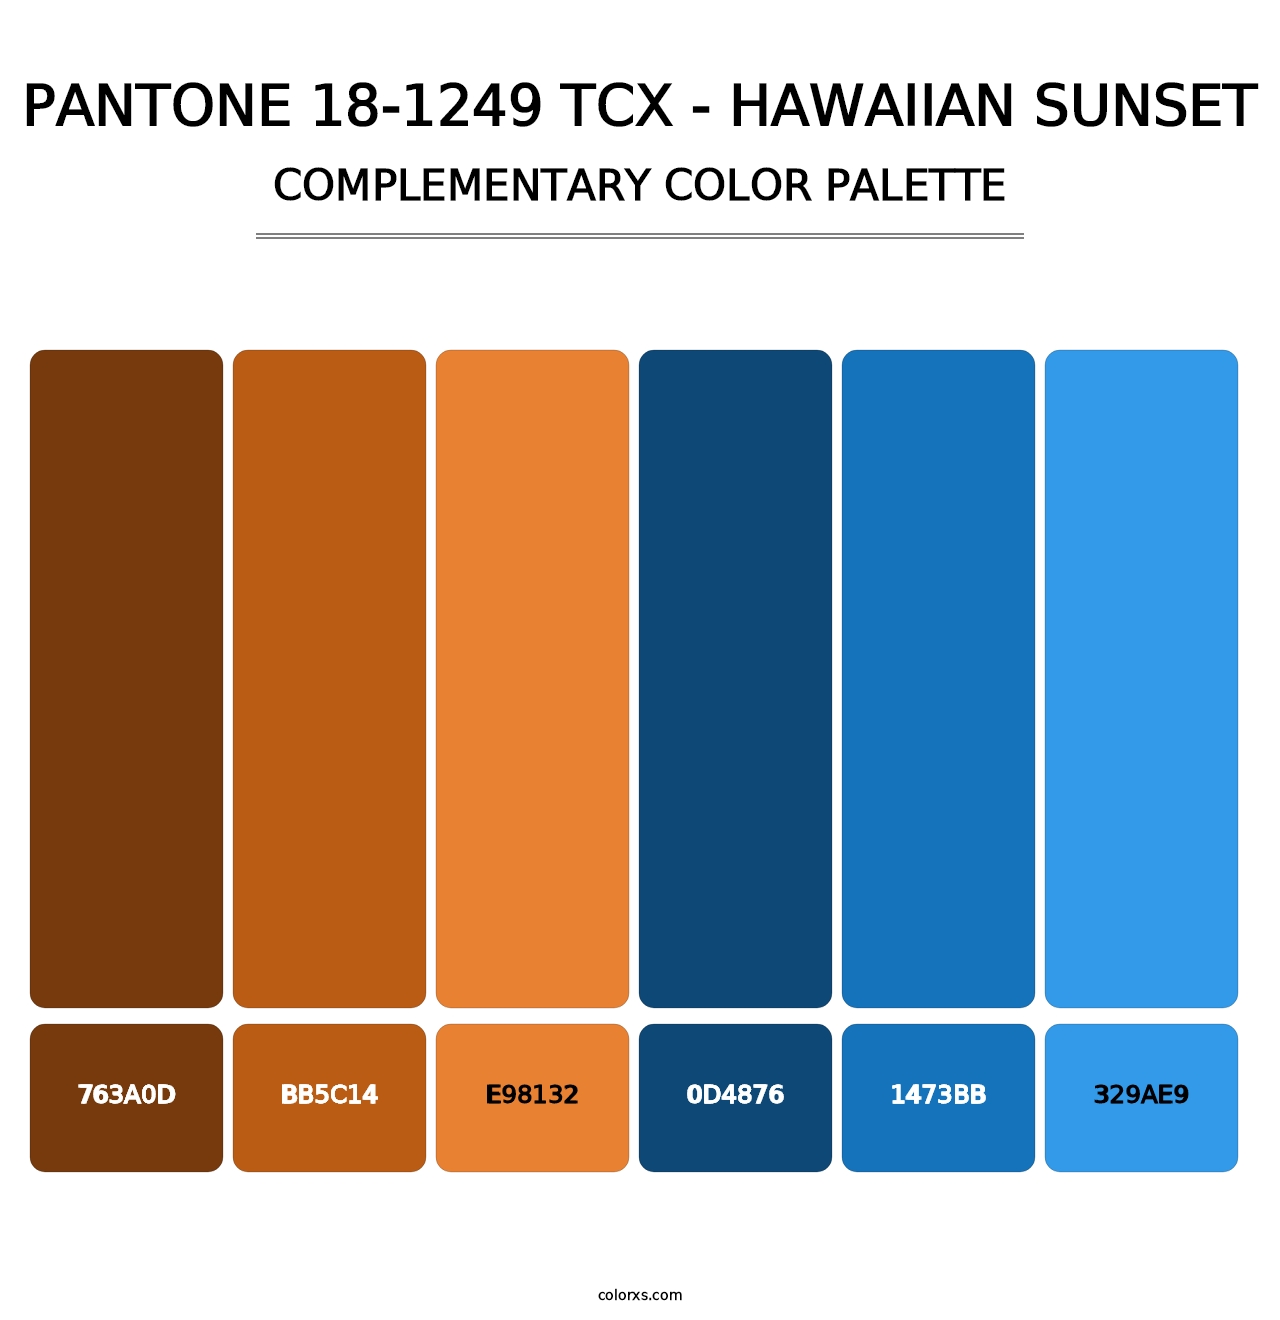 PANTONE 18-1249 TCX - Hawaiian Sunset - Complementary Color Palette